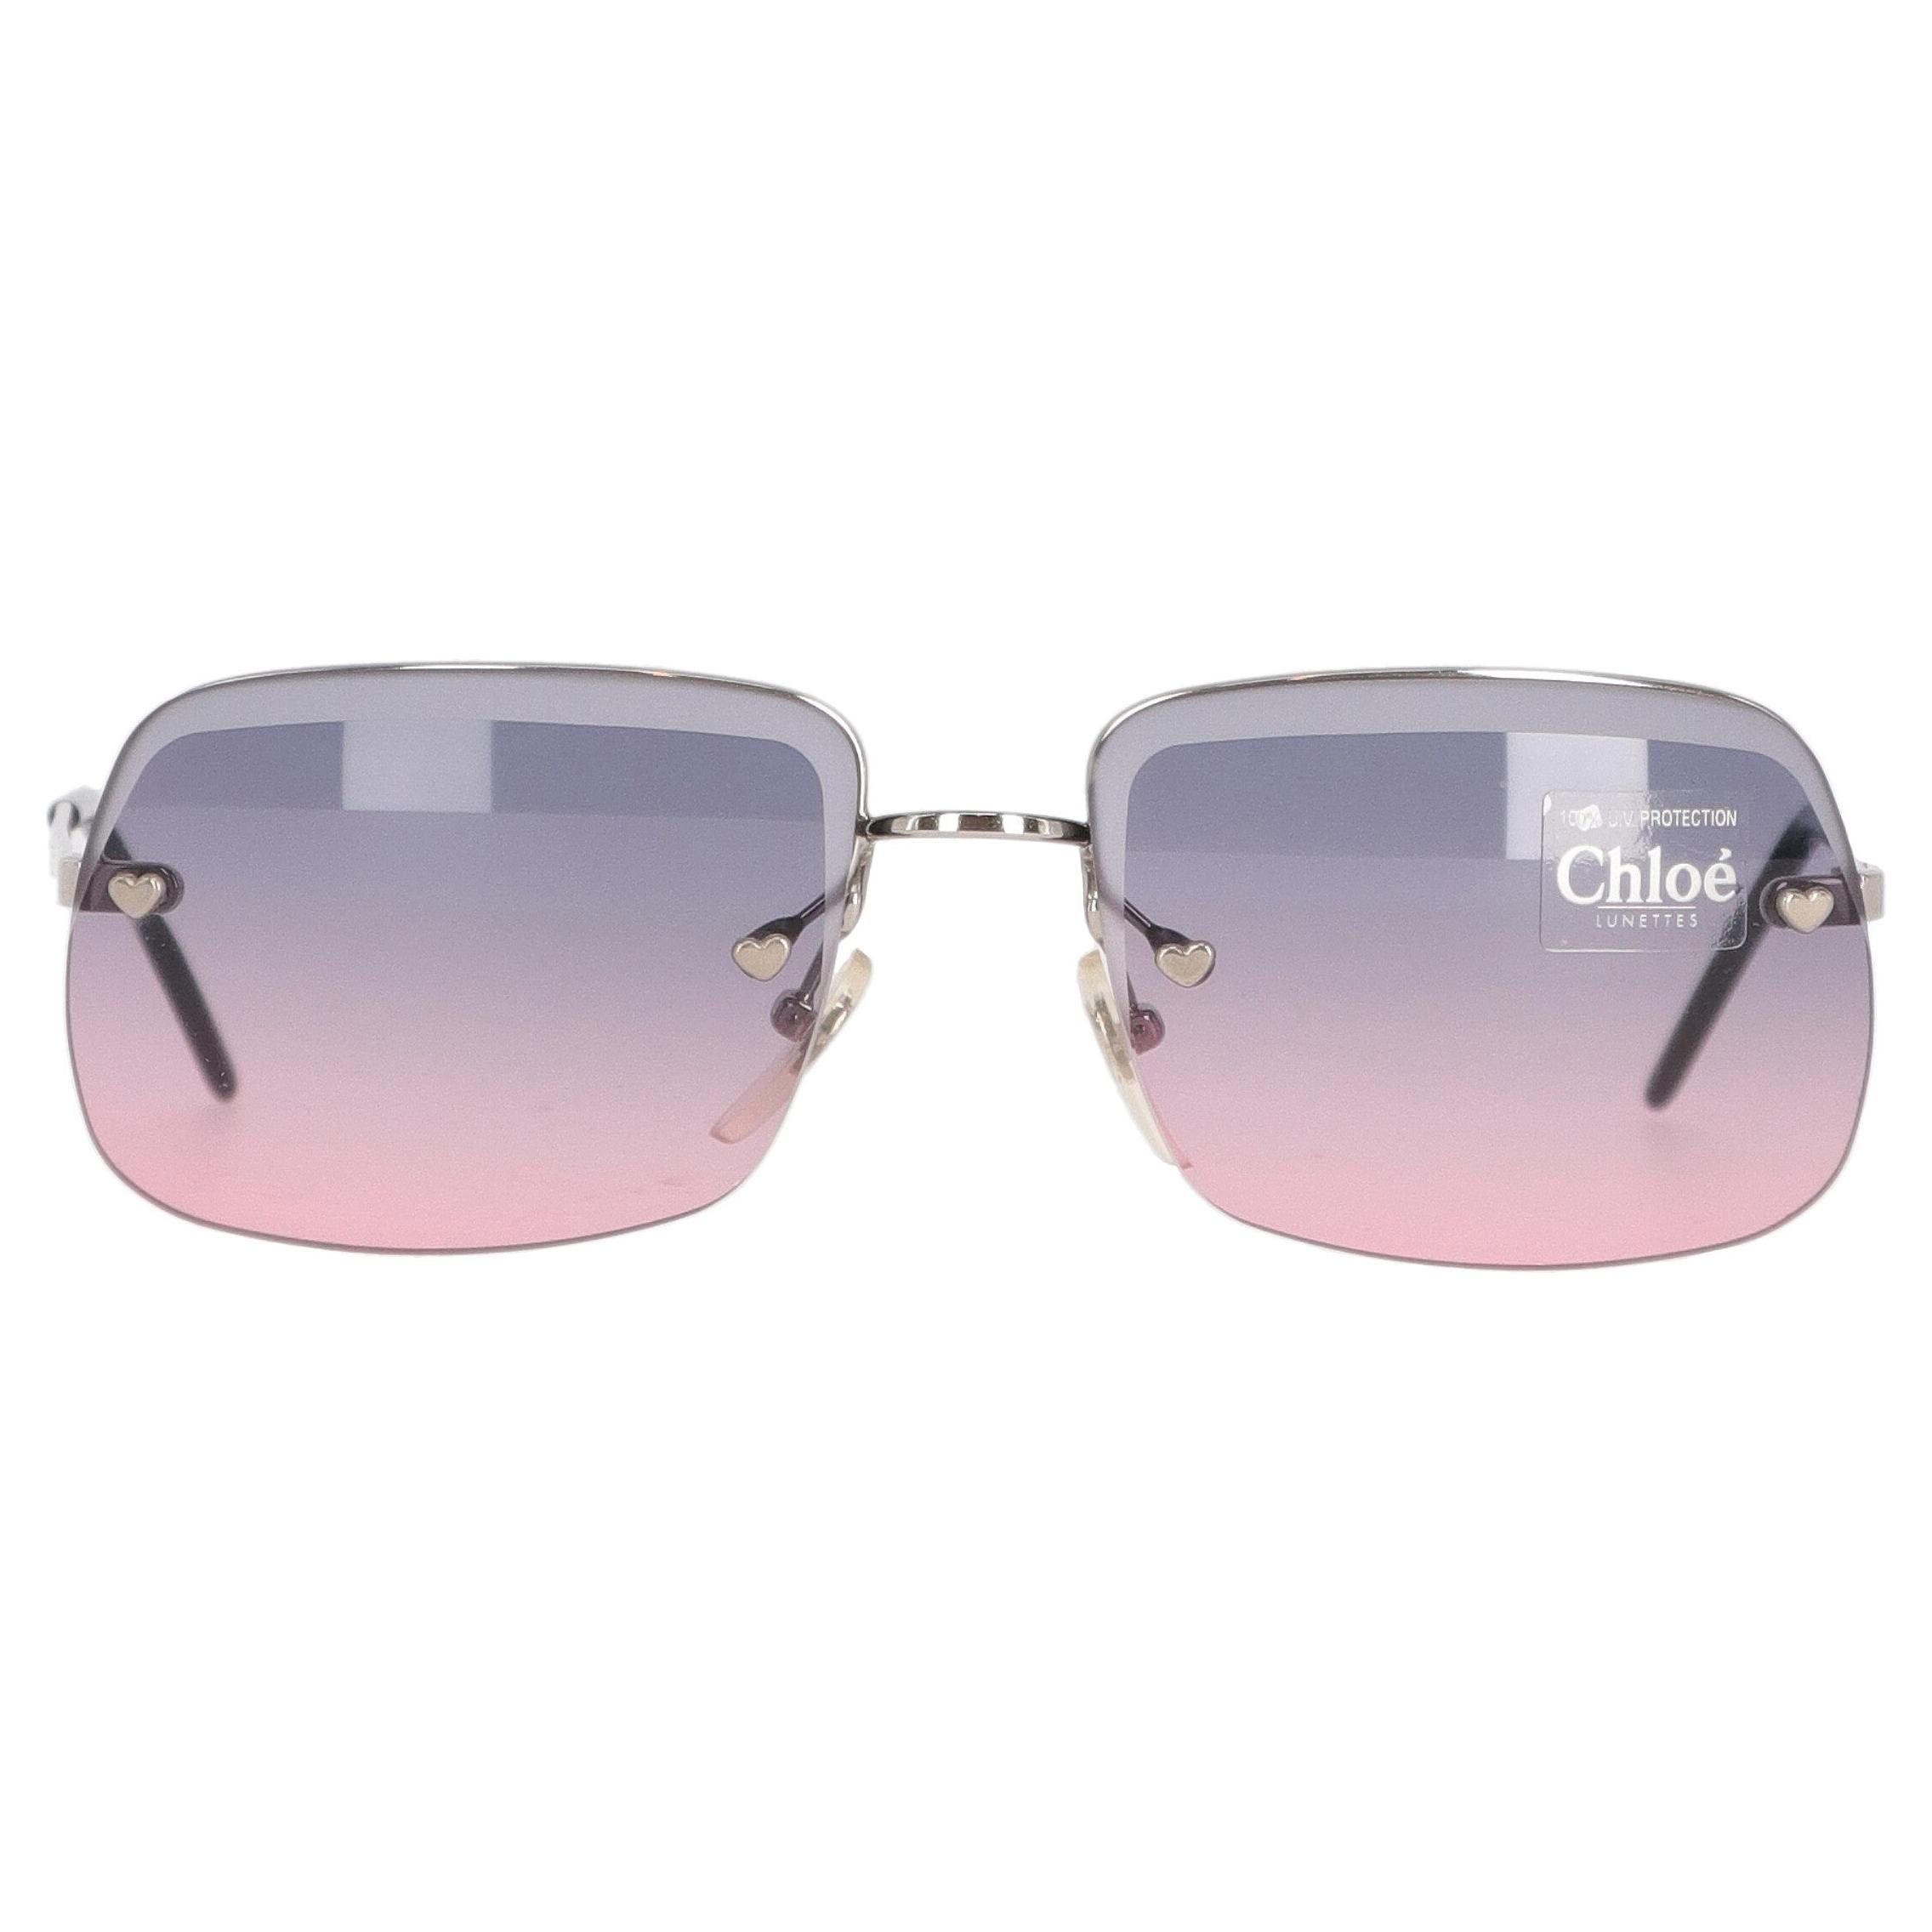 2000s Chloé Pink Sunglasses